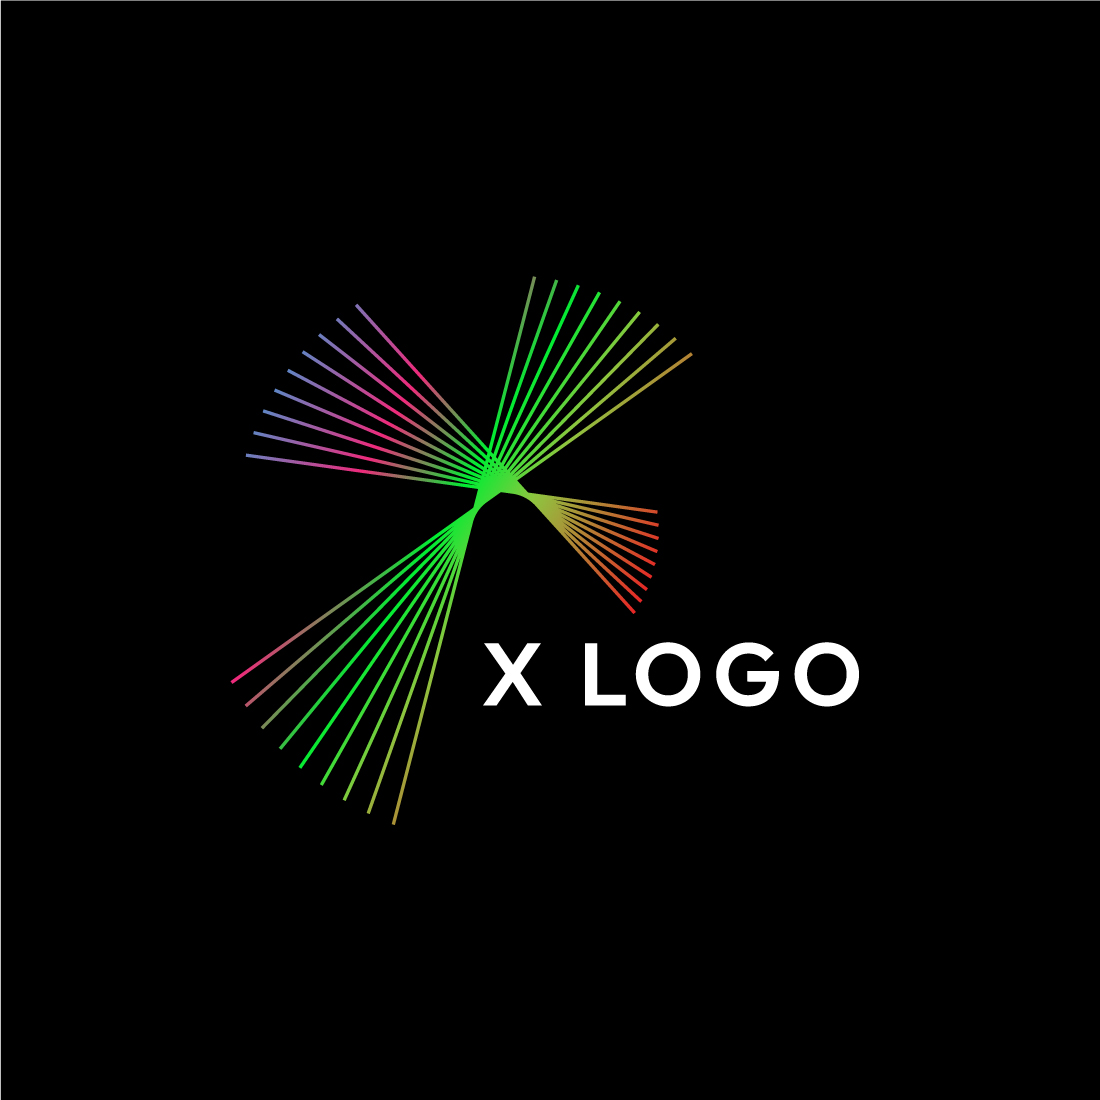 Minimalist Line Art Letter X Logo Design cover image.